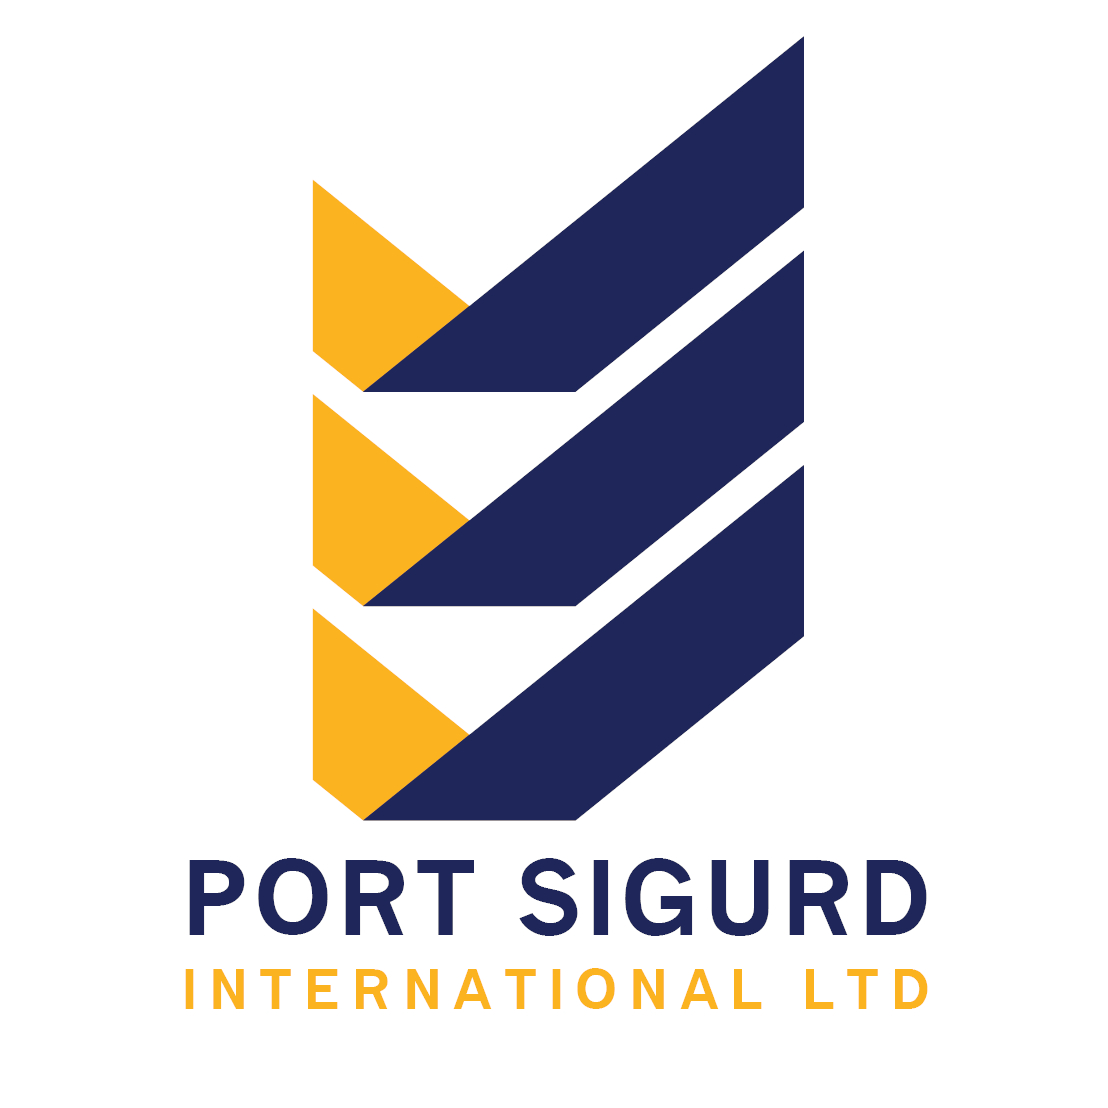 Port Sigurd International Ltd